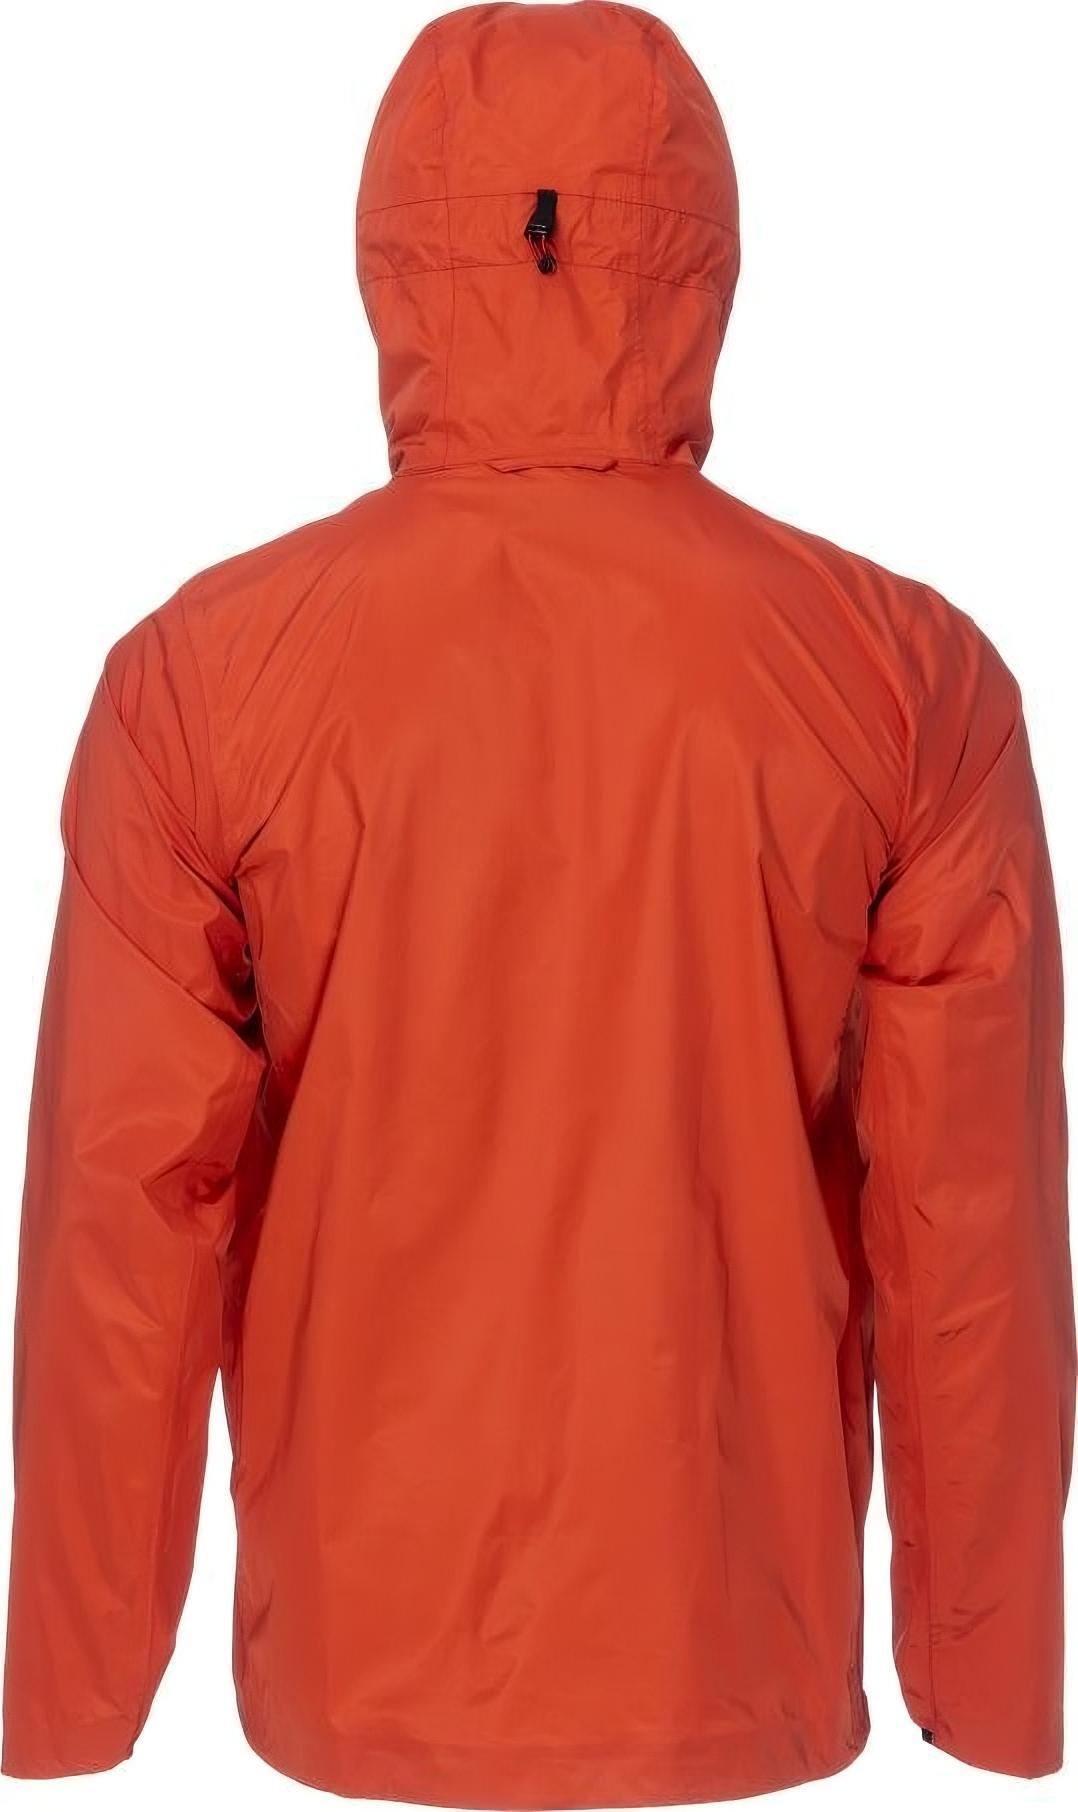 Куртка мужская Turbat Isla Mns orange red XXXL красный фото 4